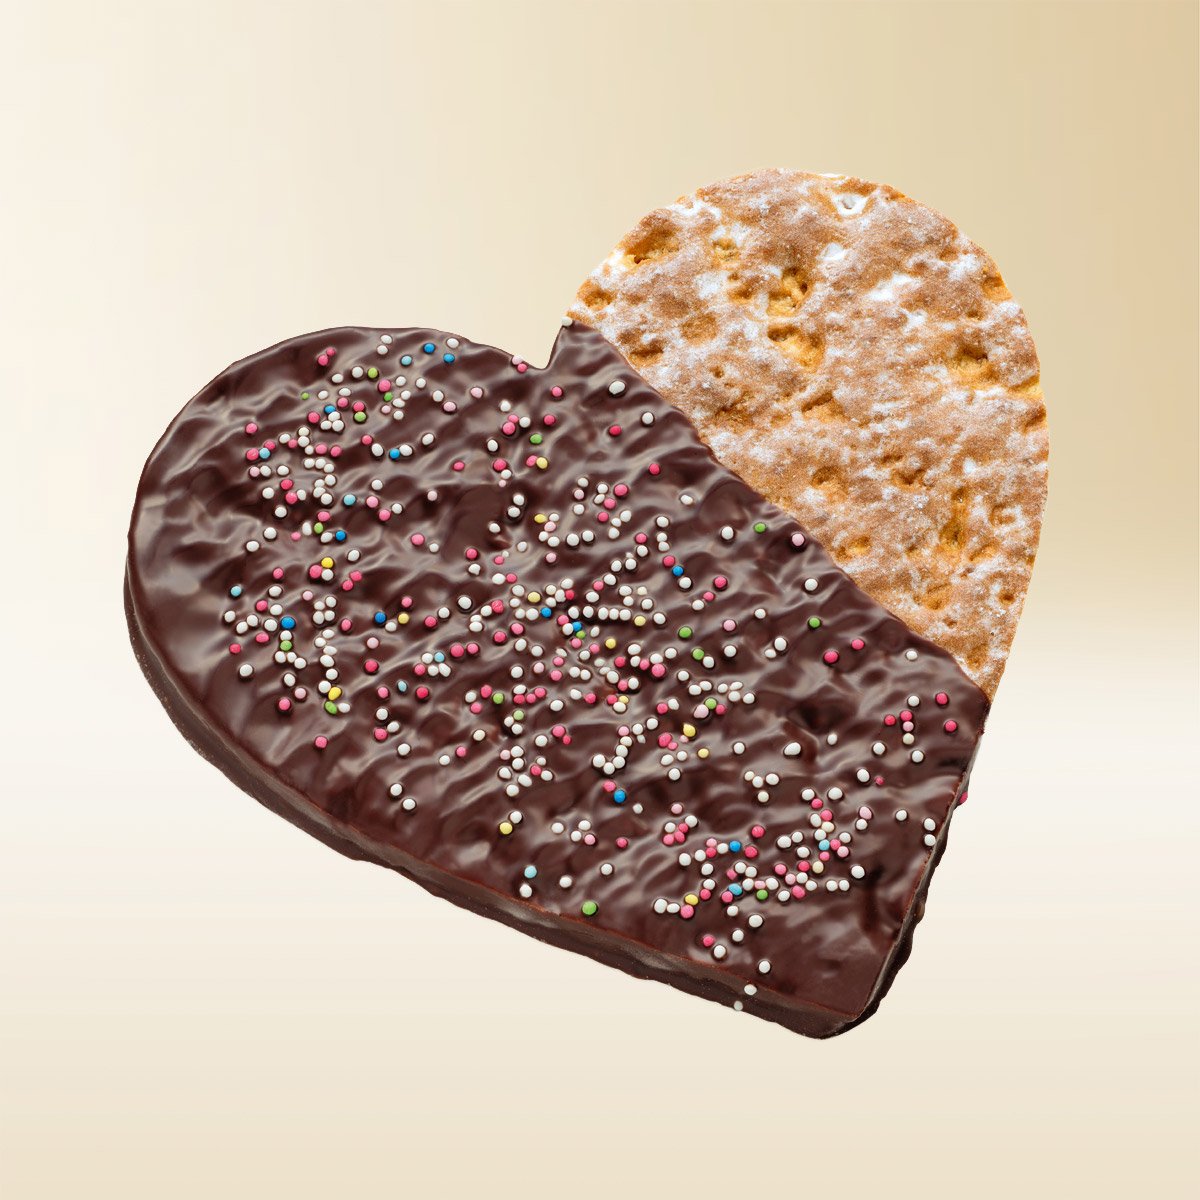 Läckerli heart, chocolate-coated 55g